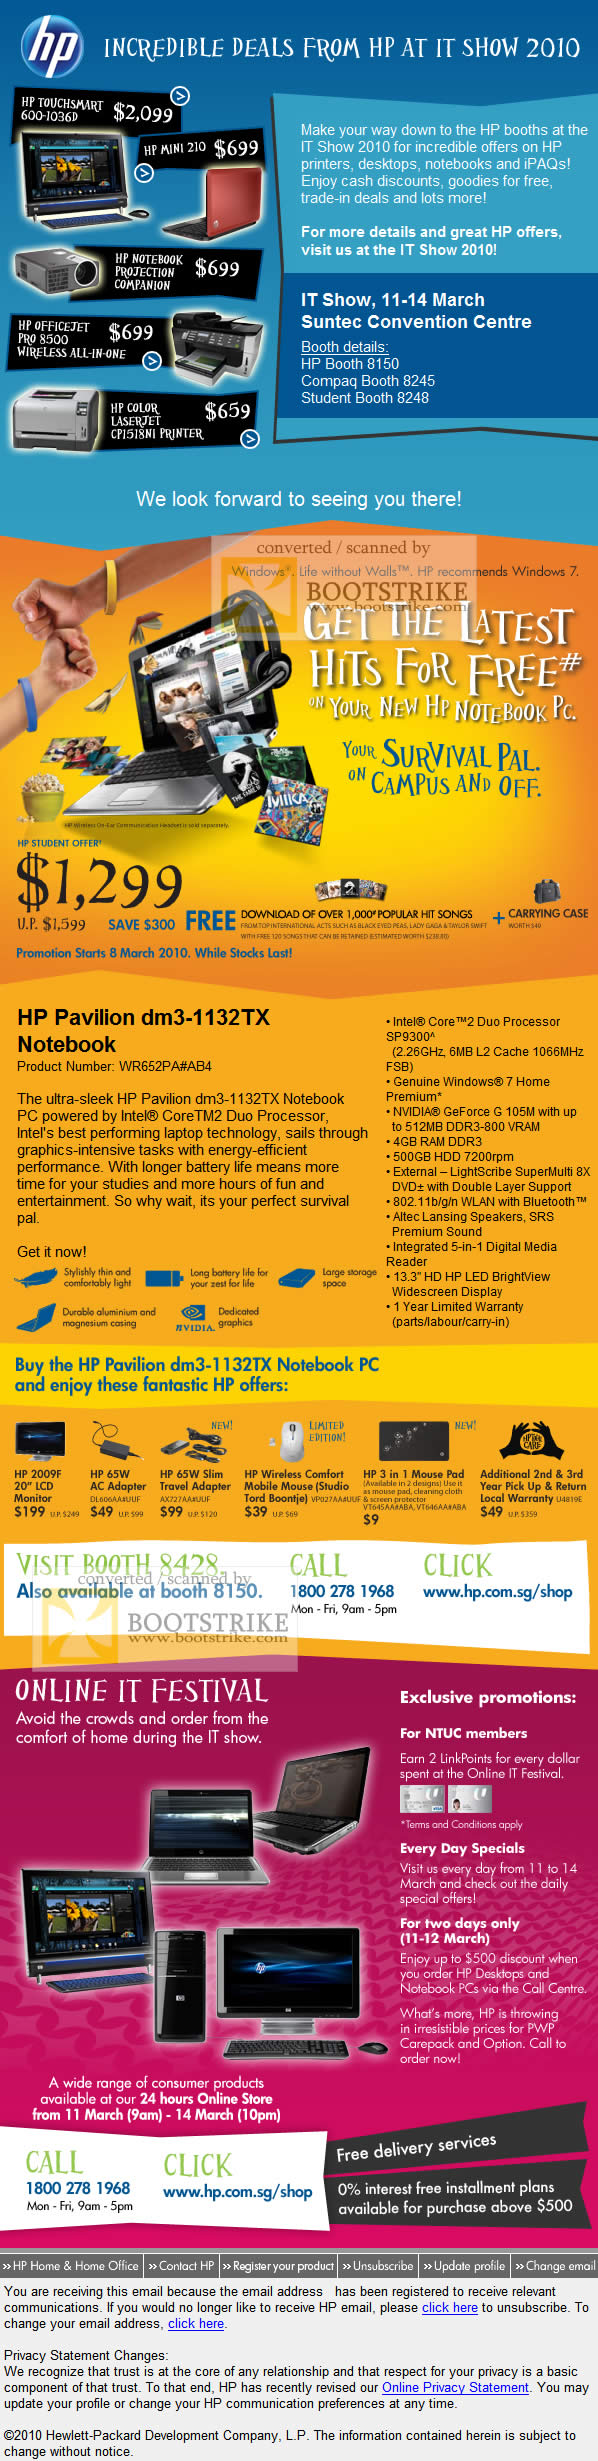 IT Show 2010 price list image brochure of HP Touchsmart Mini Notebook PC Projector Officejet LaserJet Pavilion DM3 1132TX